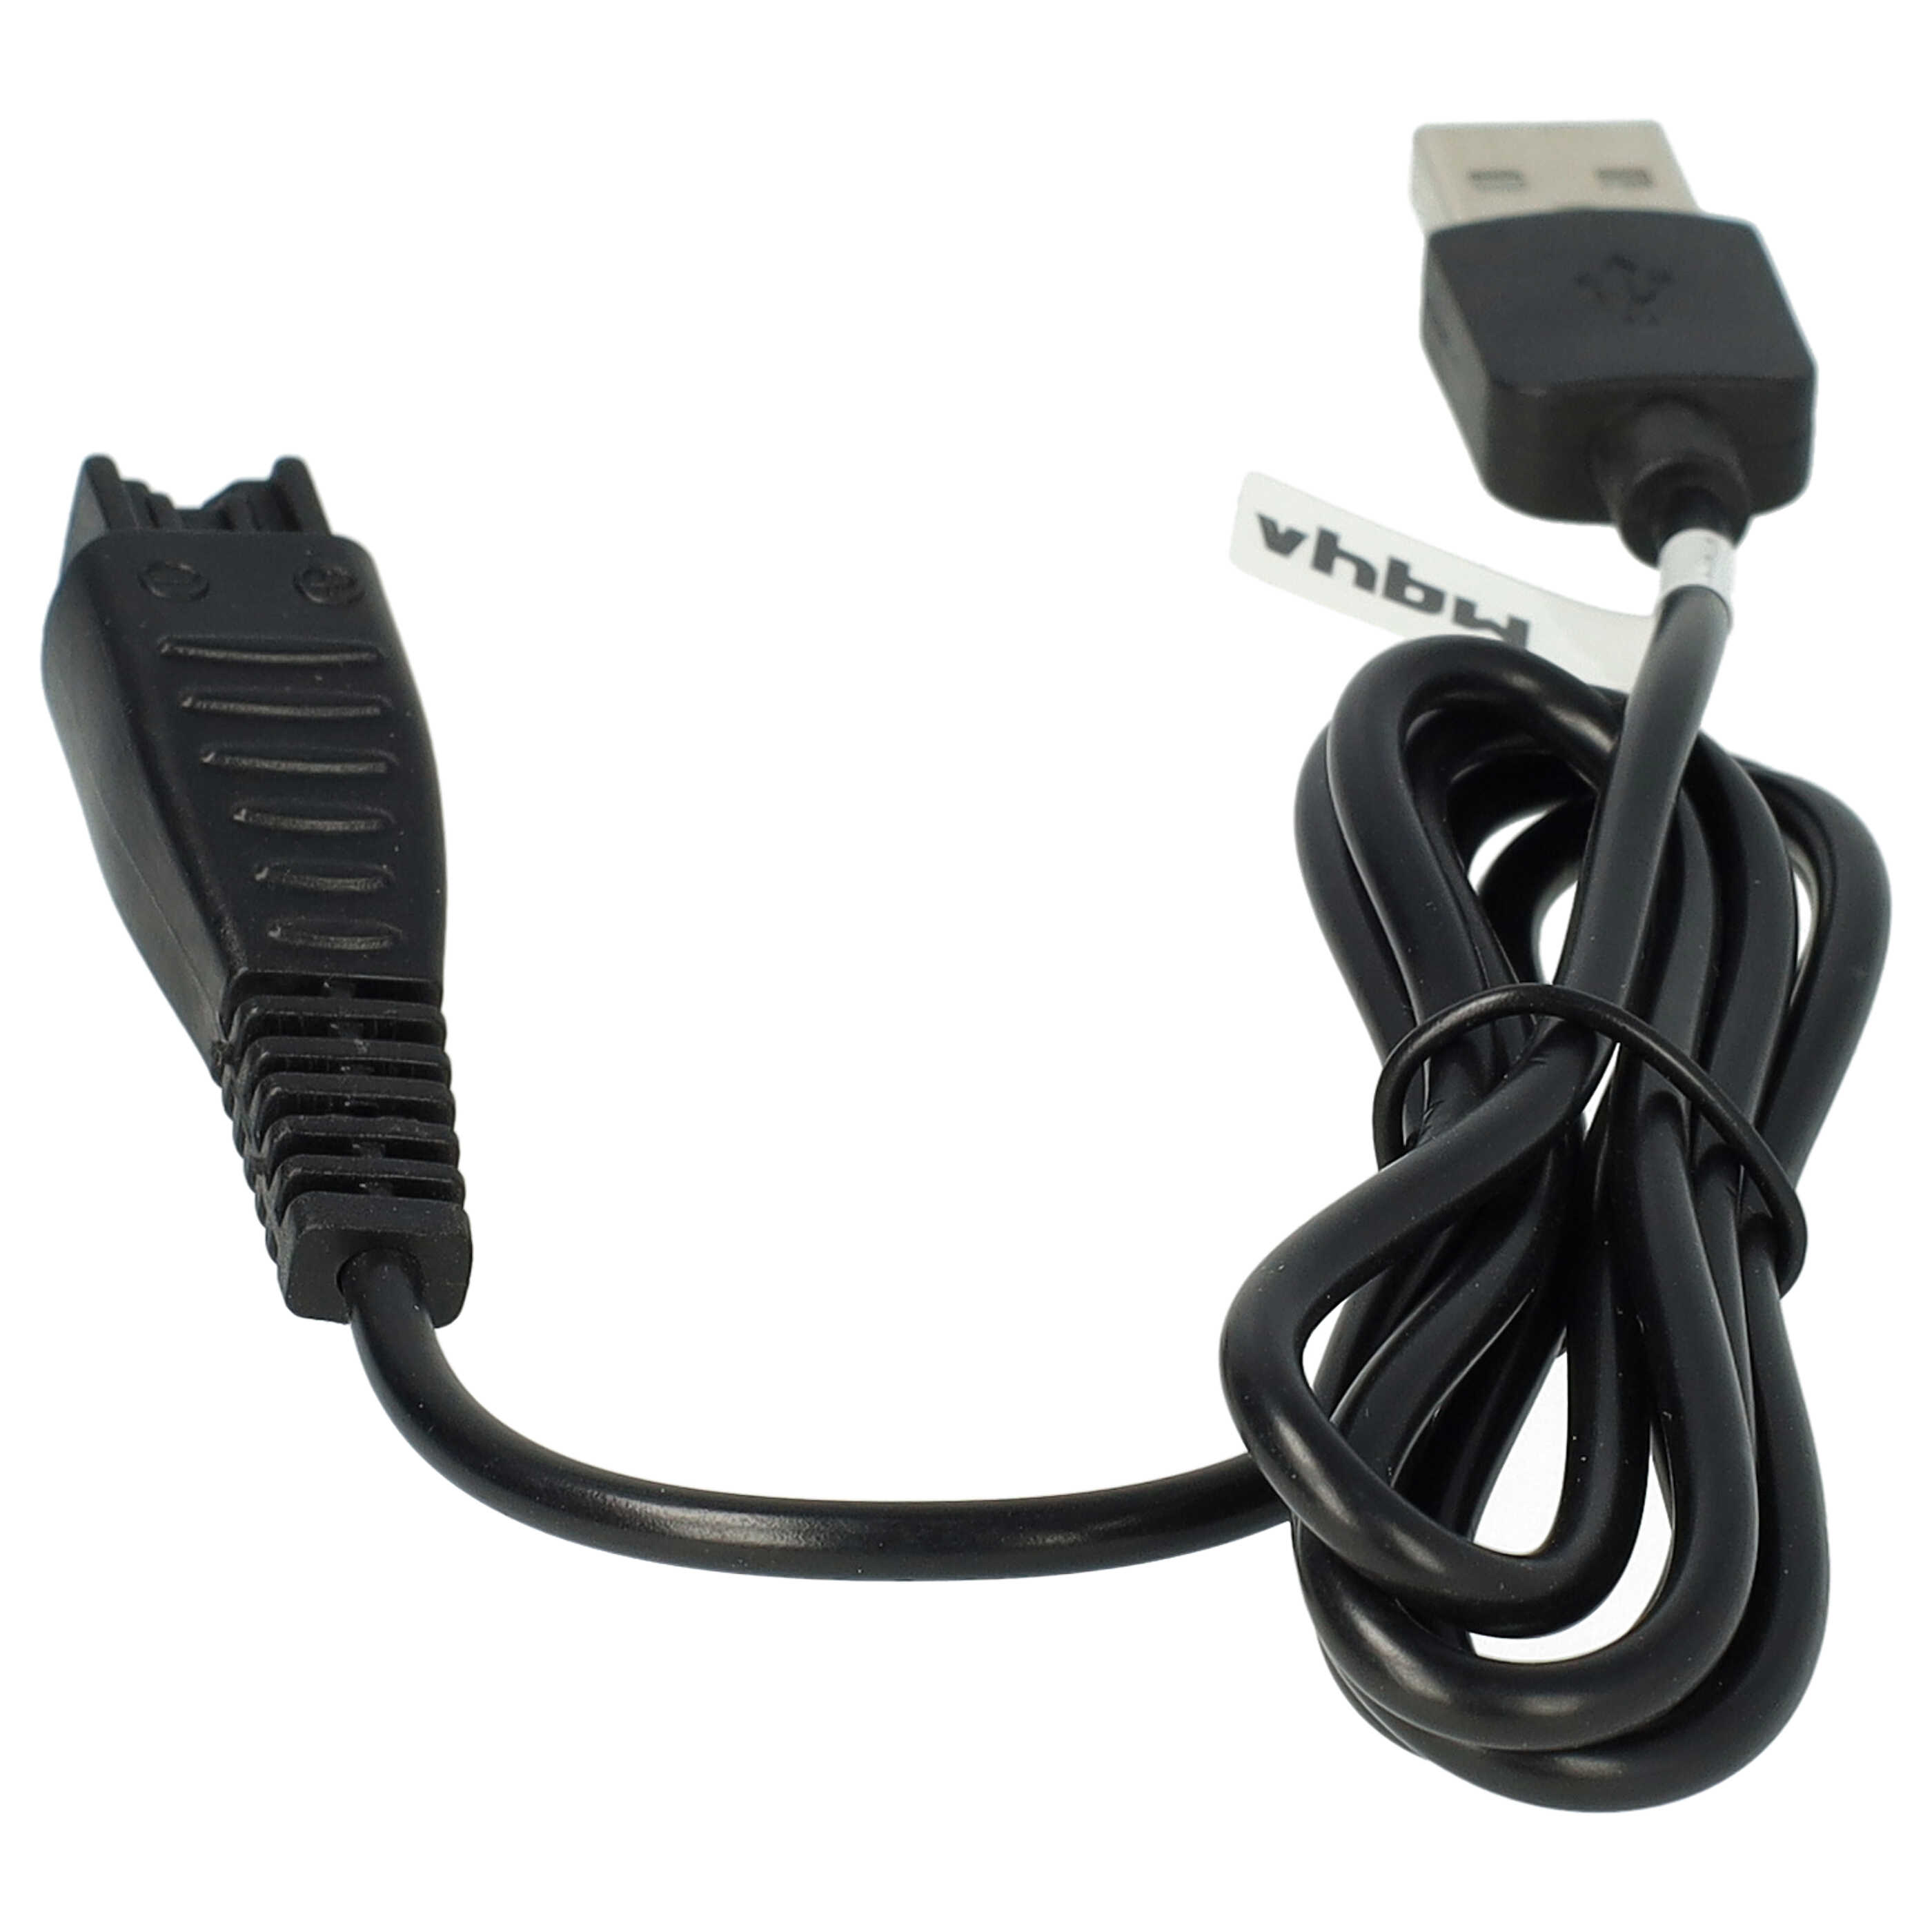 Cable de carga USB reemplaza Panasonic RE7-59, RE7-68, RE7-51, RE7-40 para afeitadoras Panasonic - 120 cm